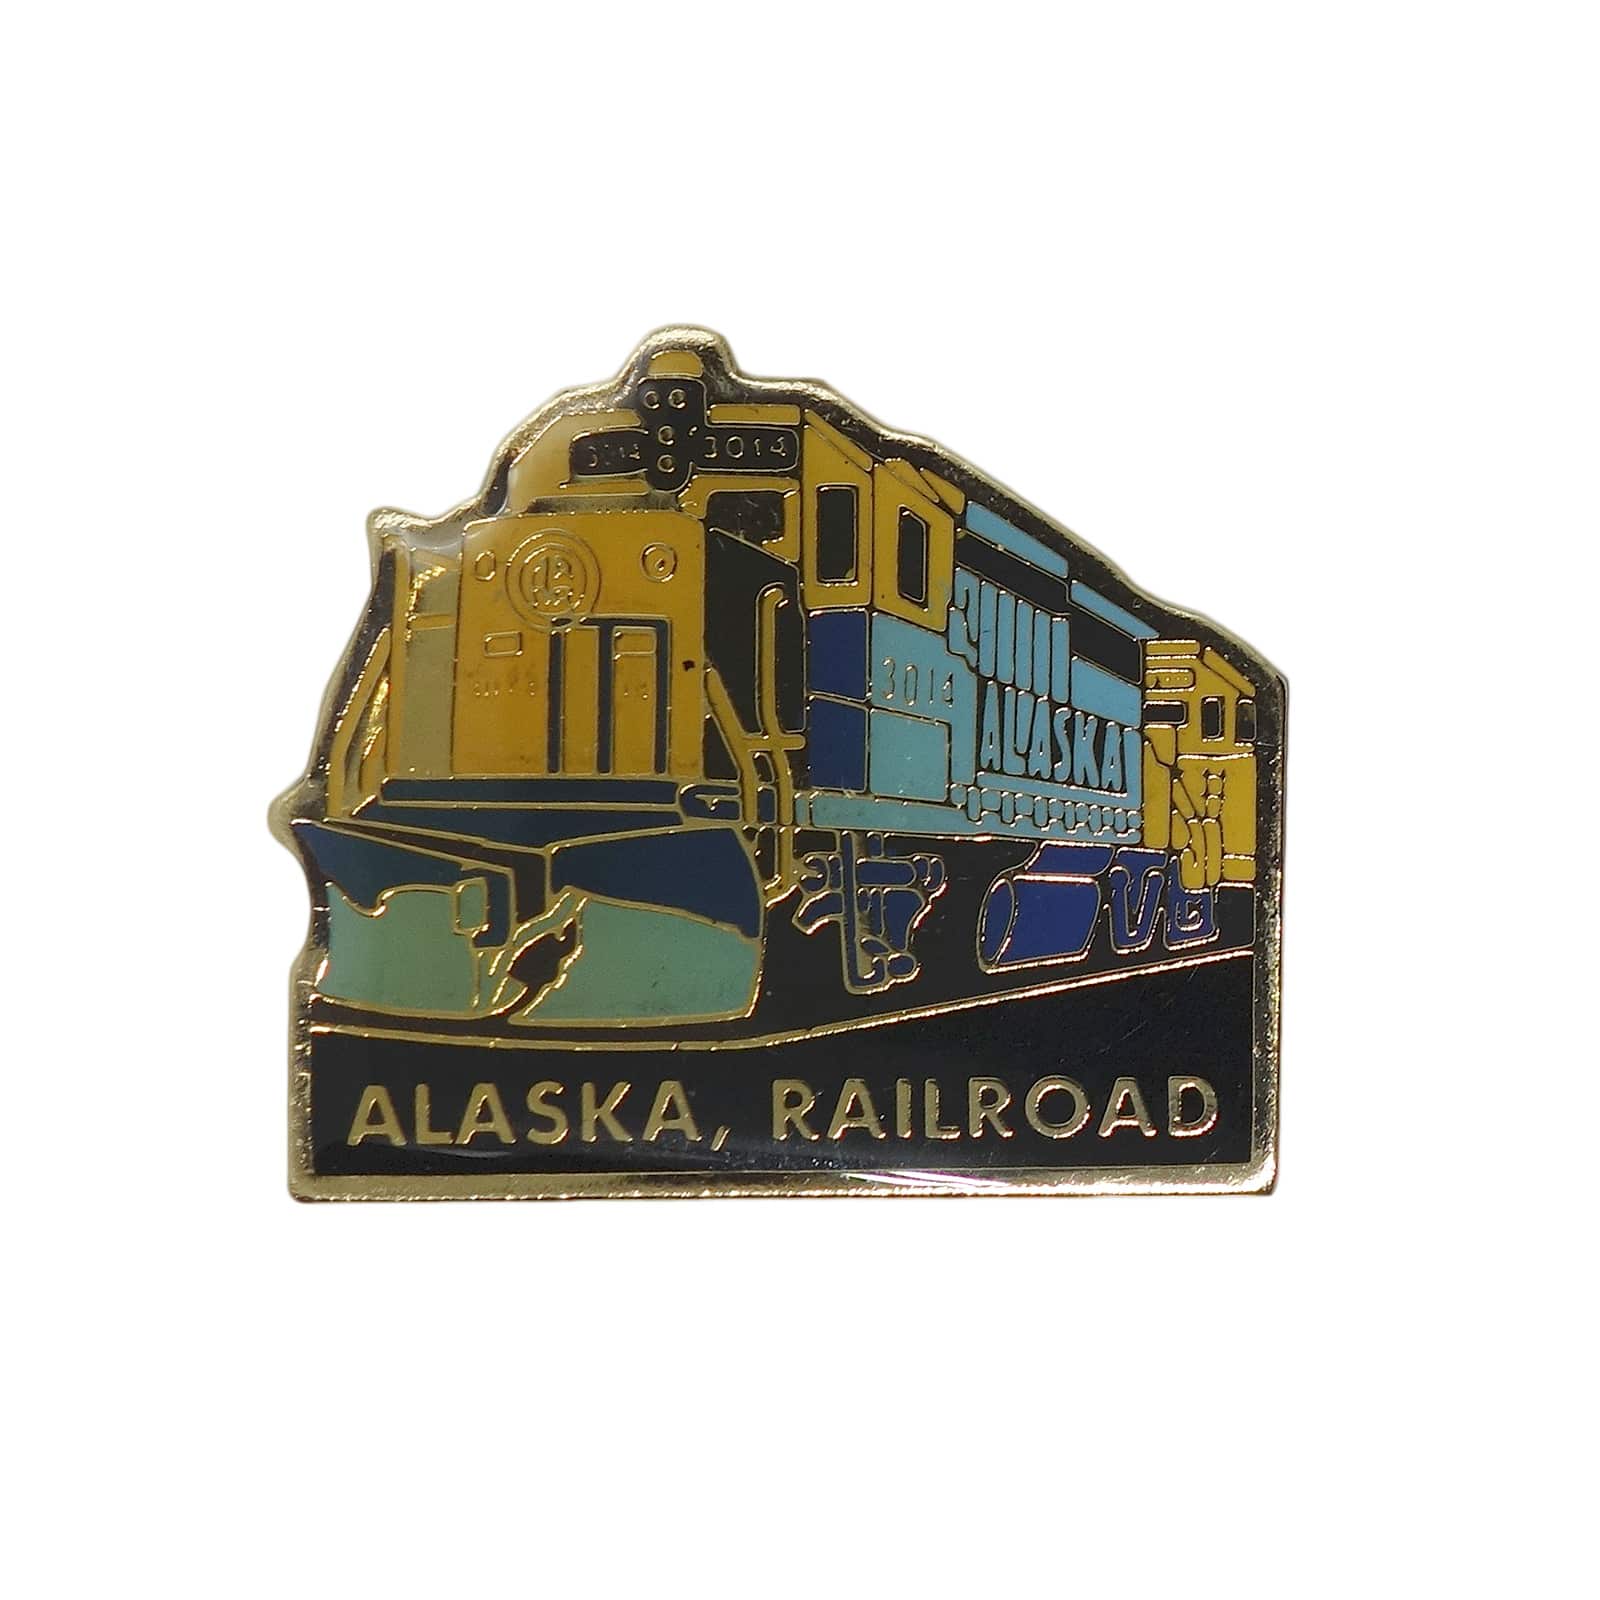 ALASKA, RAILROAD ピンズ アラスカ鉄道 留め具付き